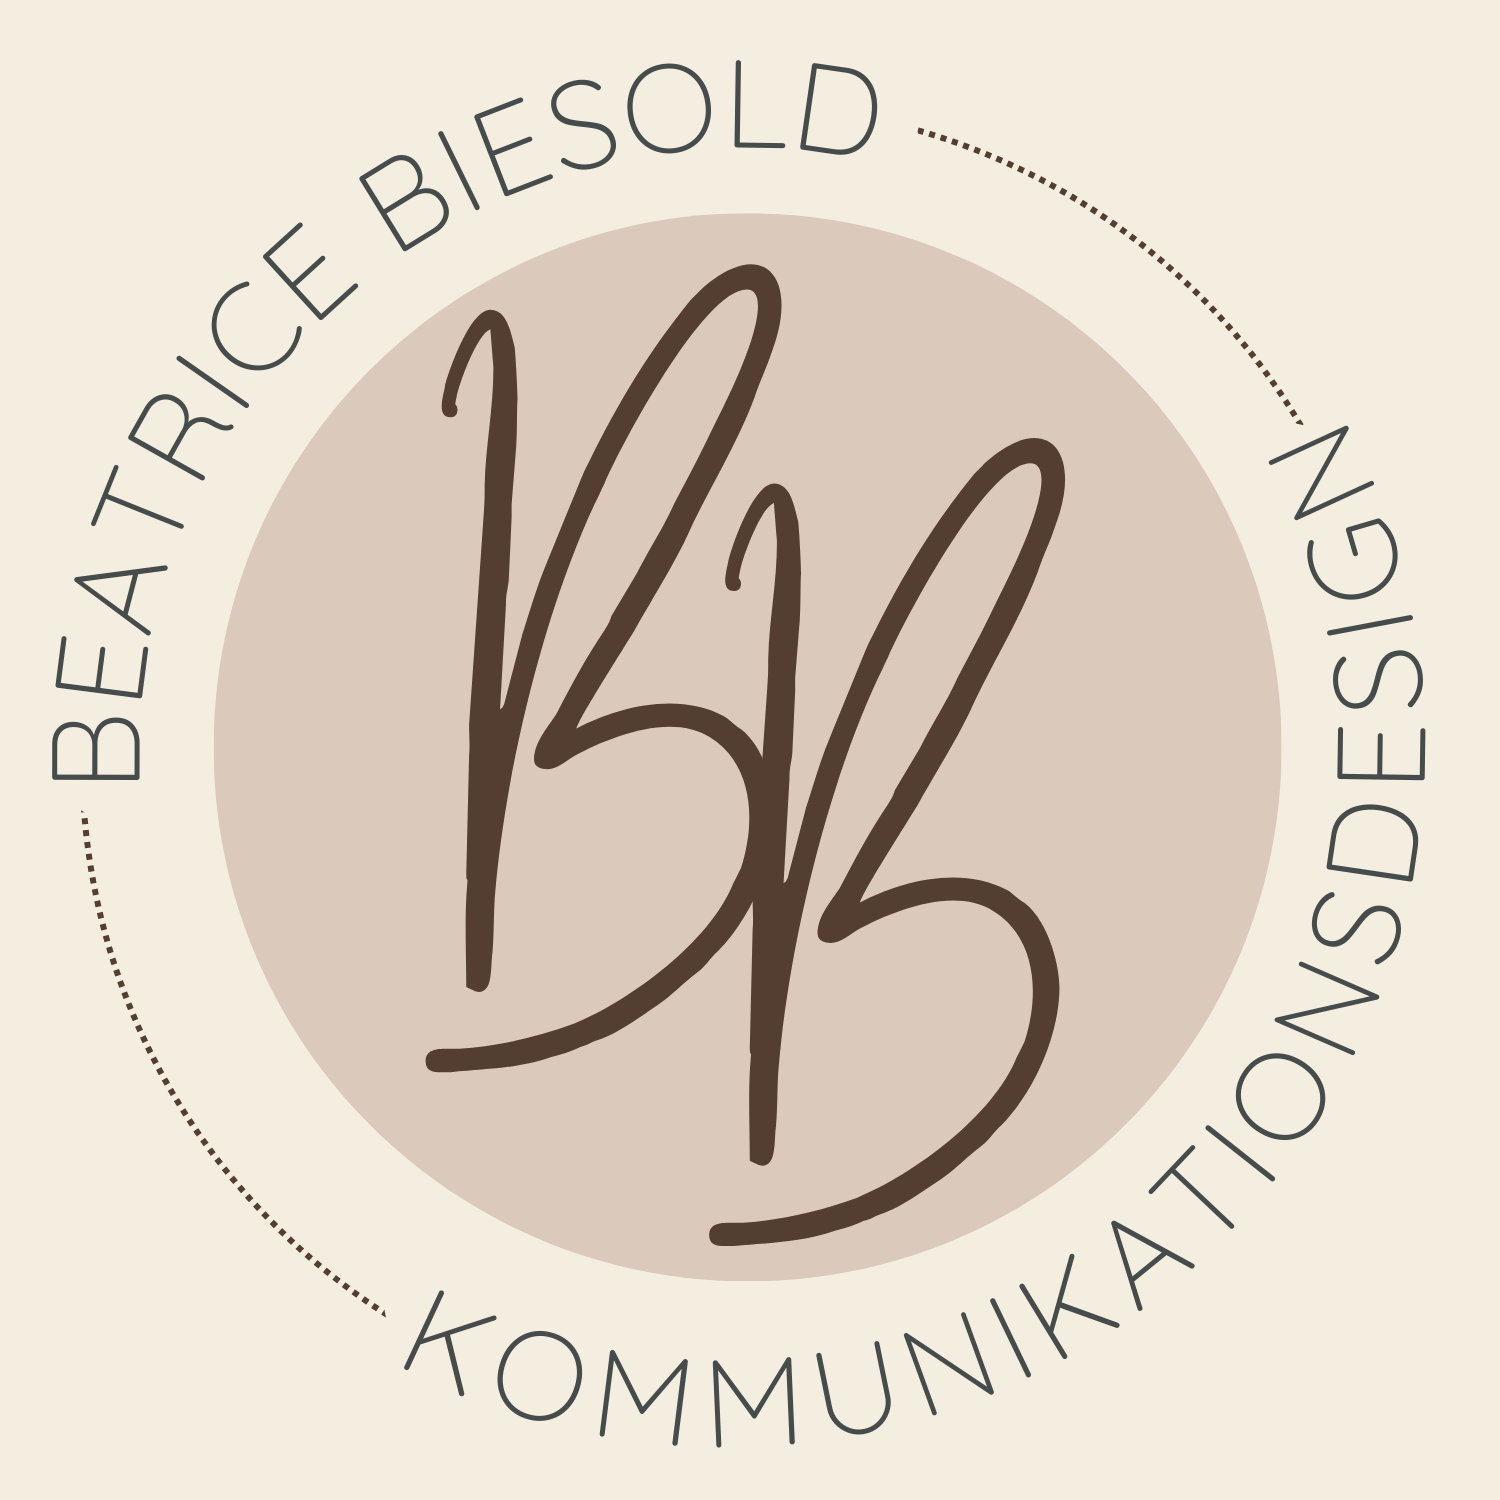 Kommunikationsdesign Beatrice Biesold  Logo